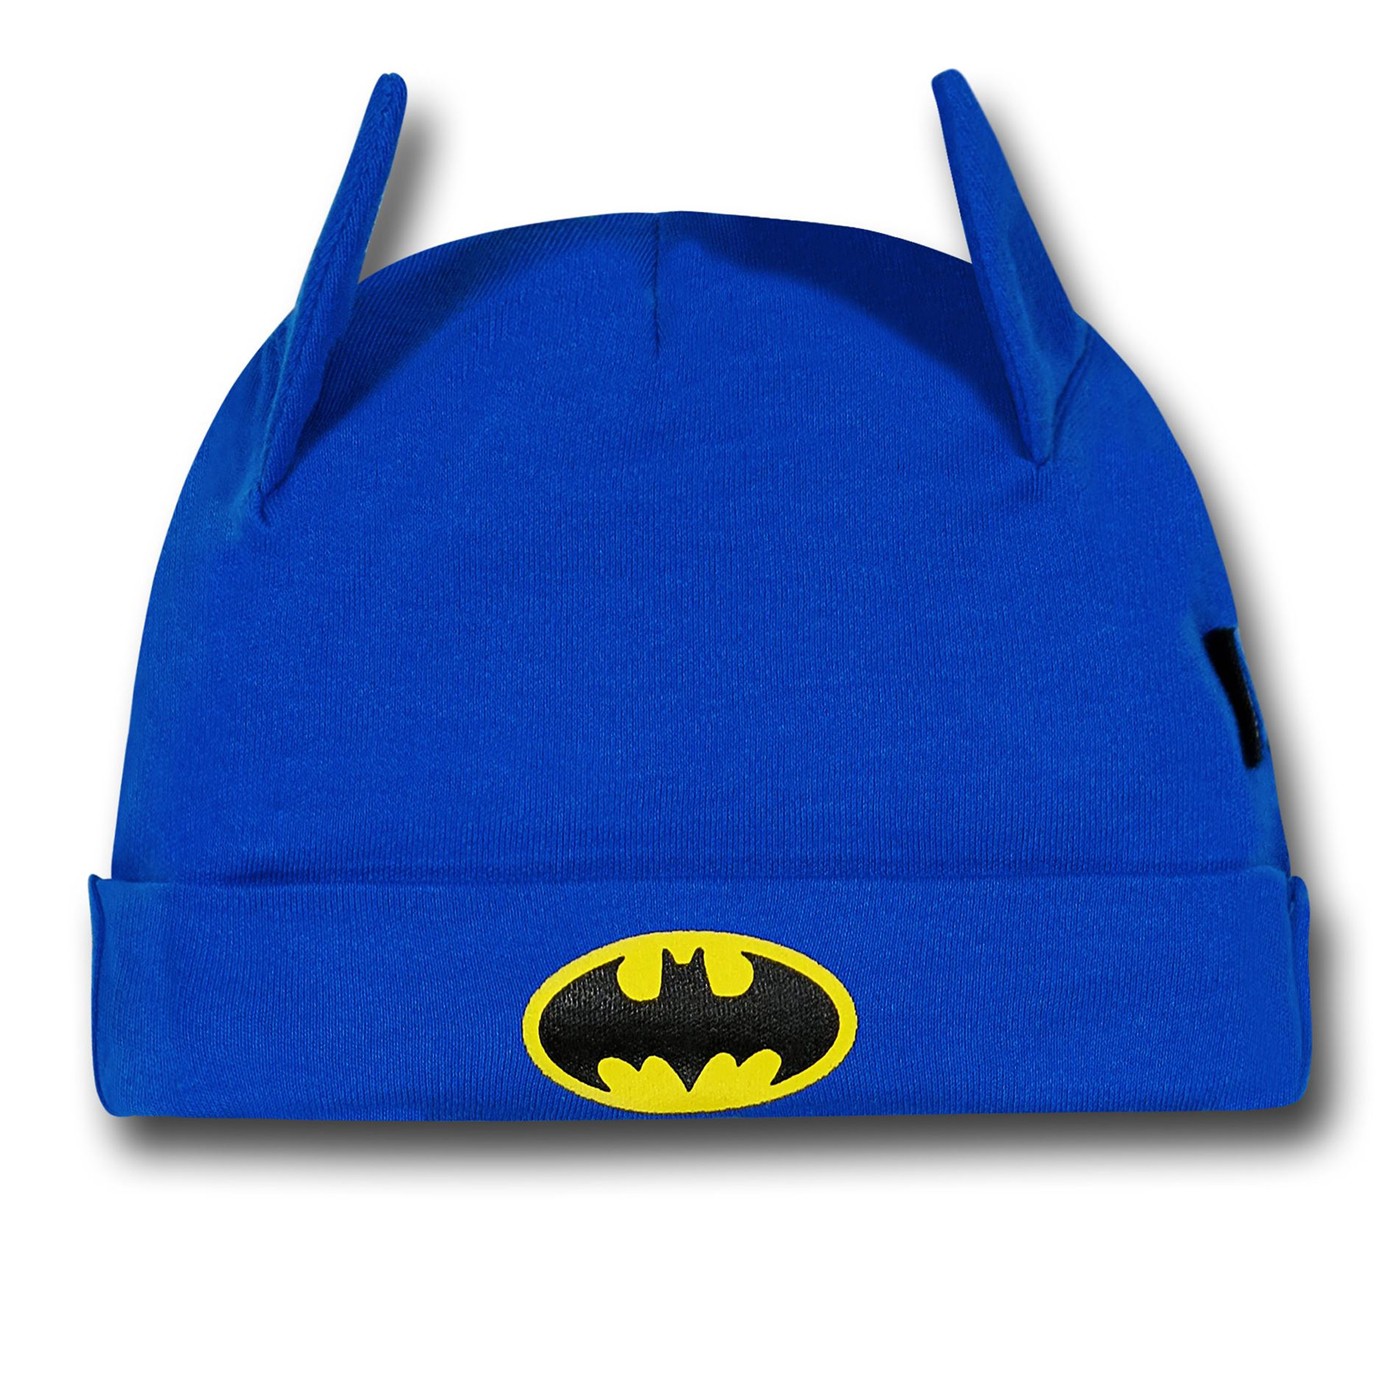 Batman 3pc Grey Costume Newborn Gift Set